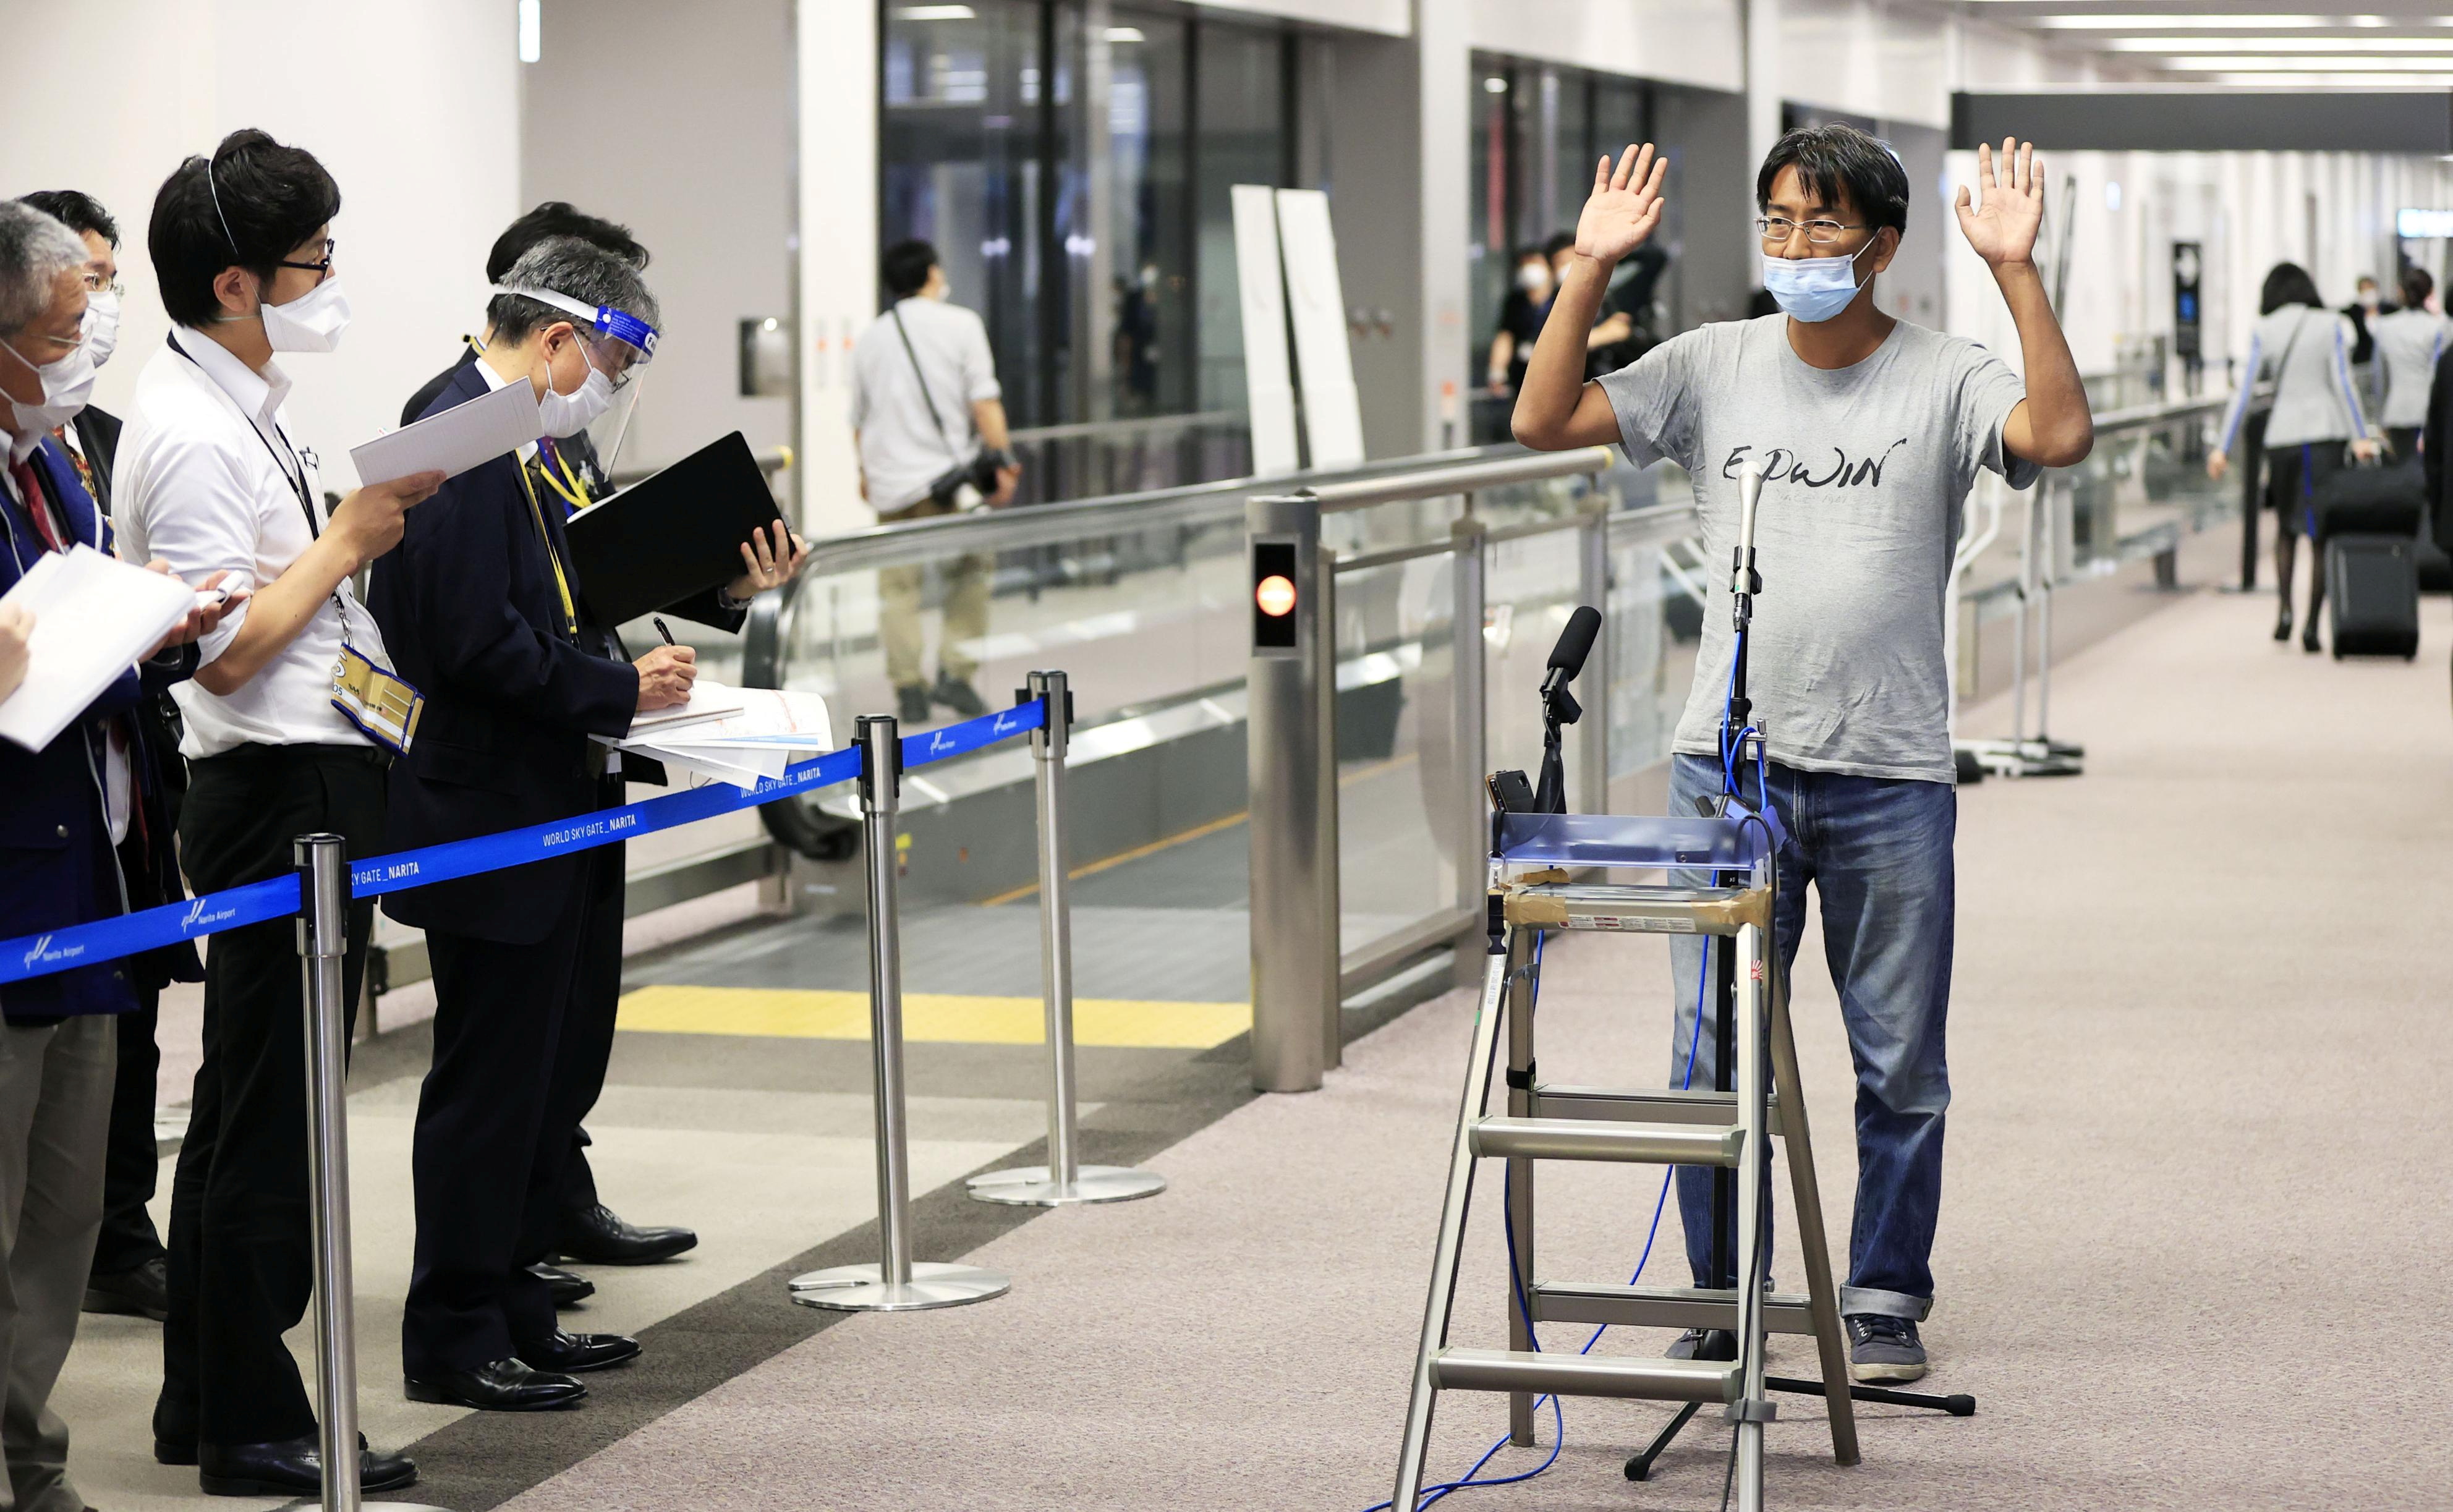 Japanese journalist Yuki Kitazumi who was detained in Myanmar speaks to media upon his arrival at Narita Airport in Narita, Japan